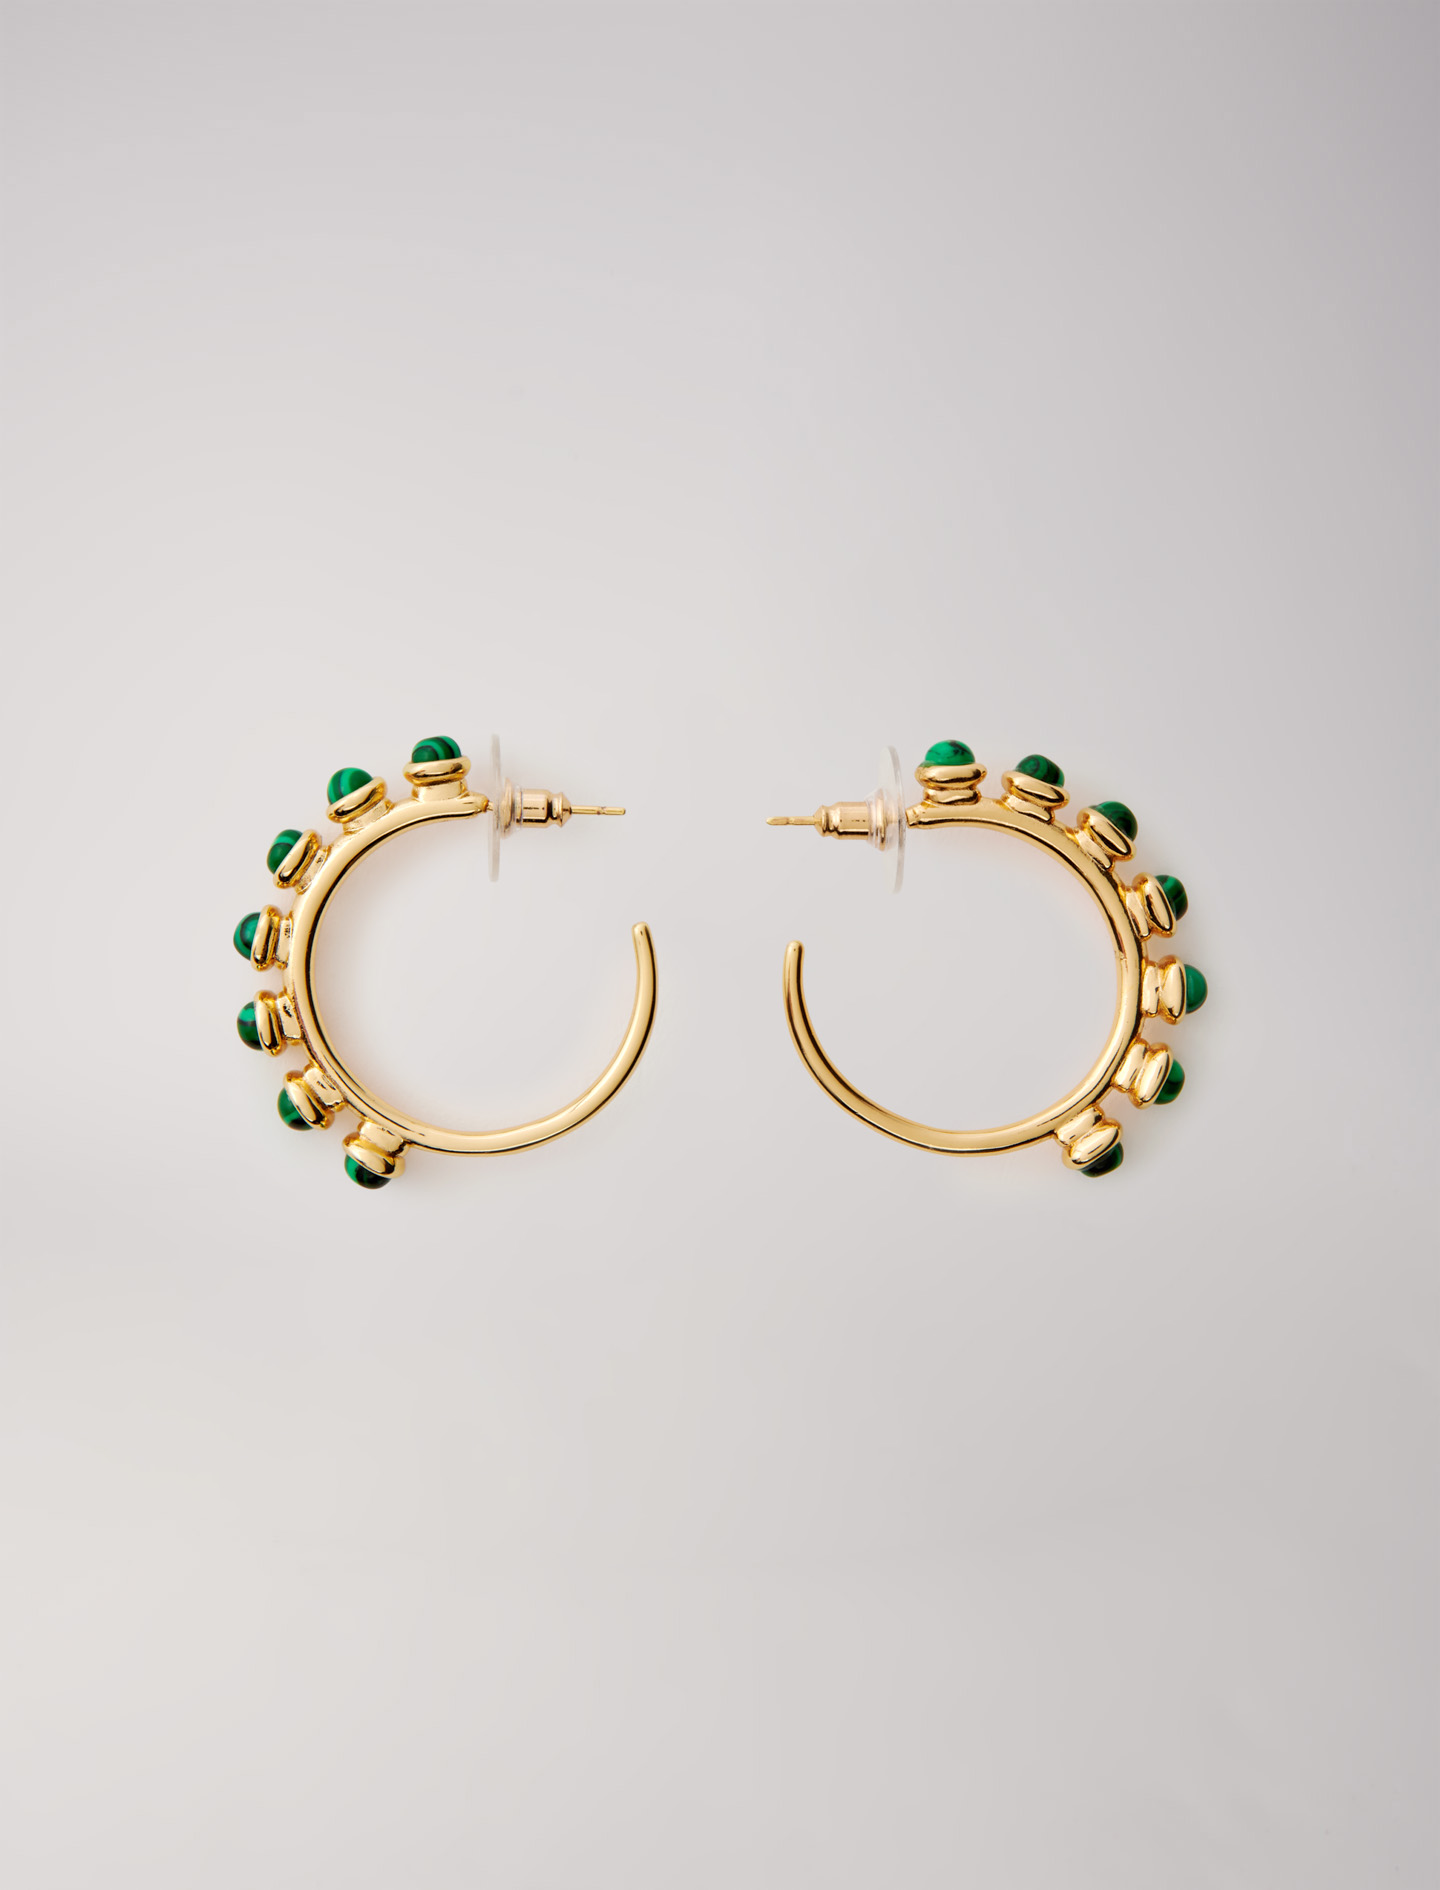 Maje Woman's malachite Jewellery: Rhinestone earrings for Fall/Winter, in color Gold / Yellow